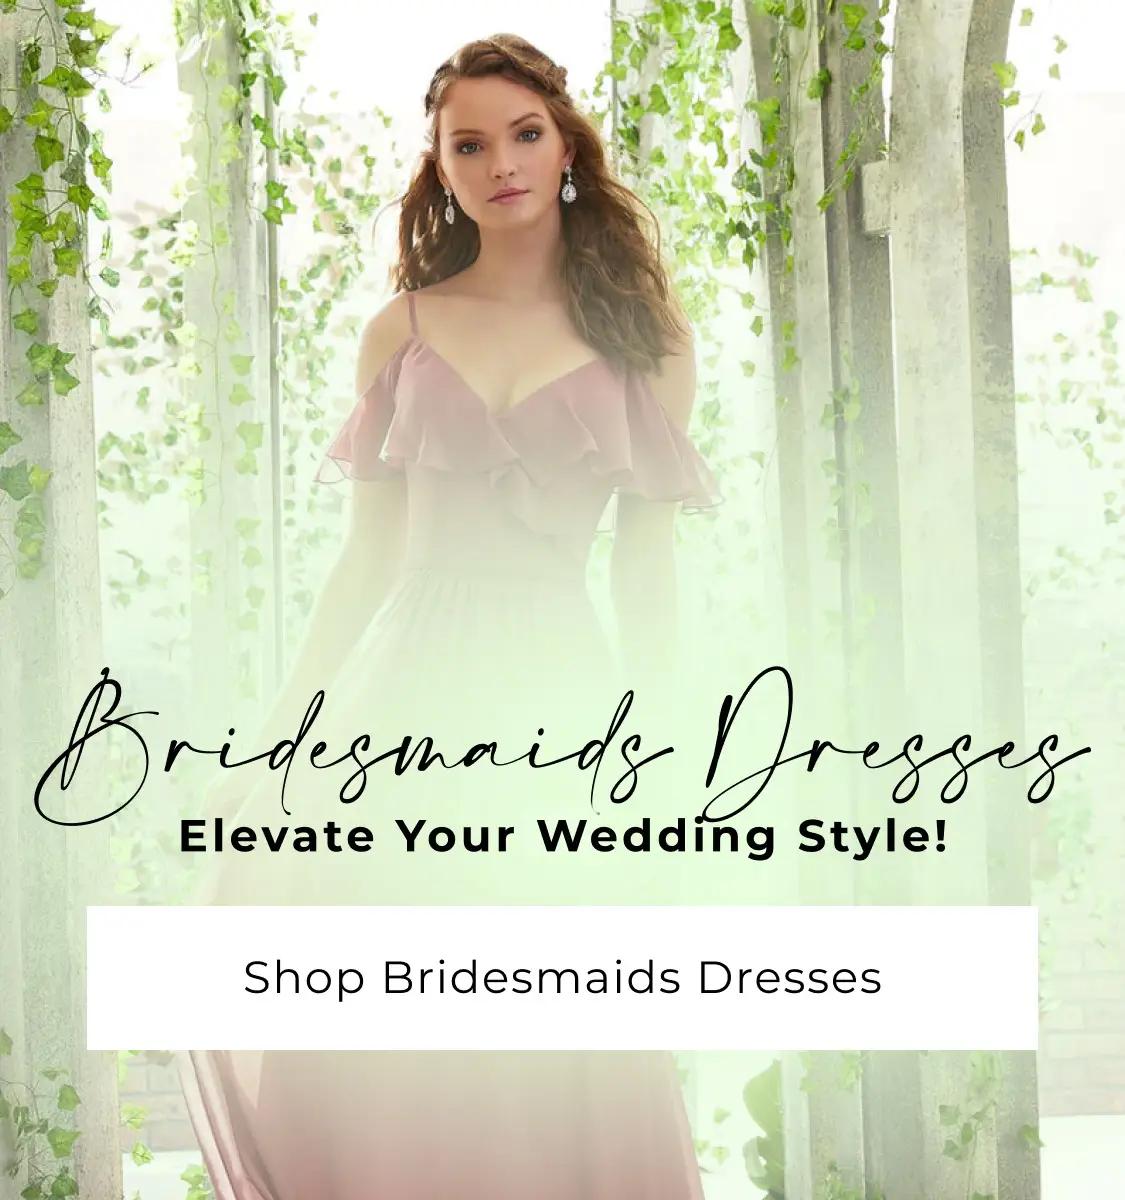 Mobile Bridesmaids Dresses Banner